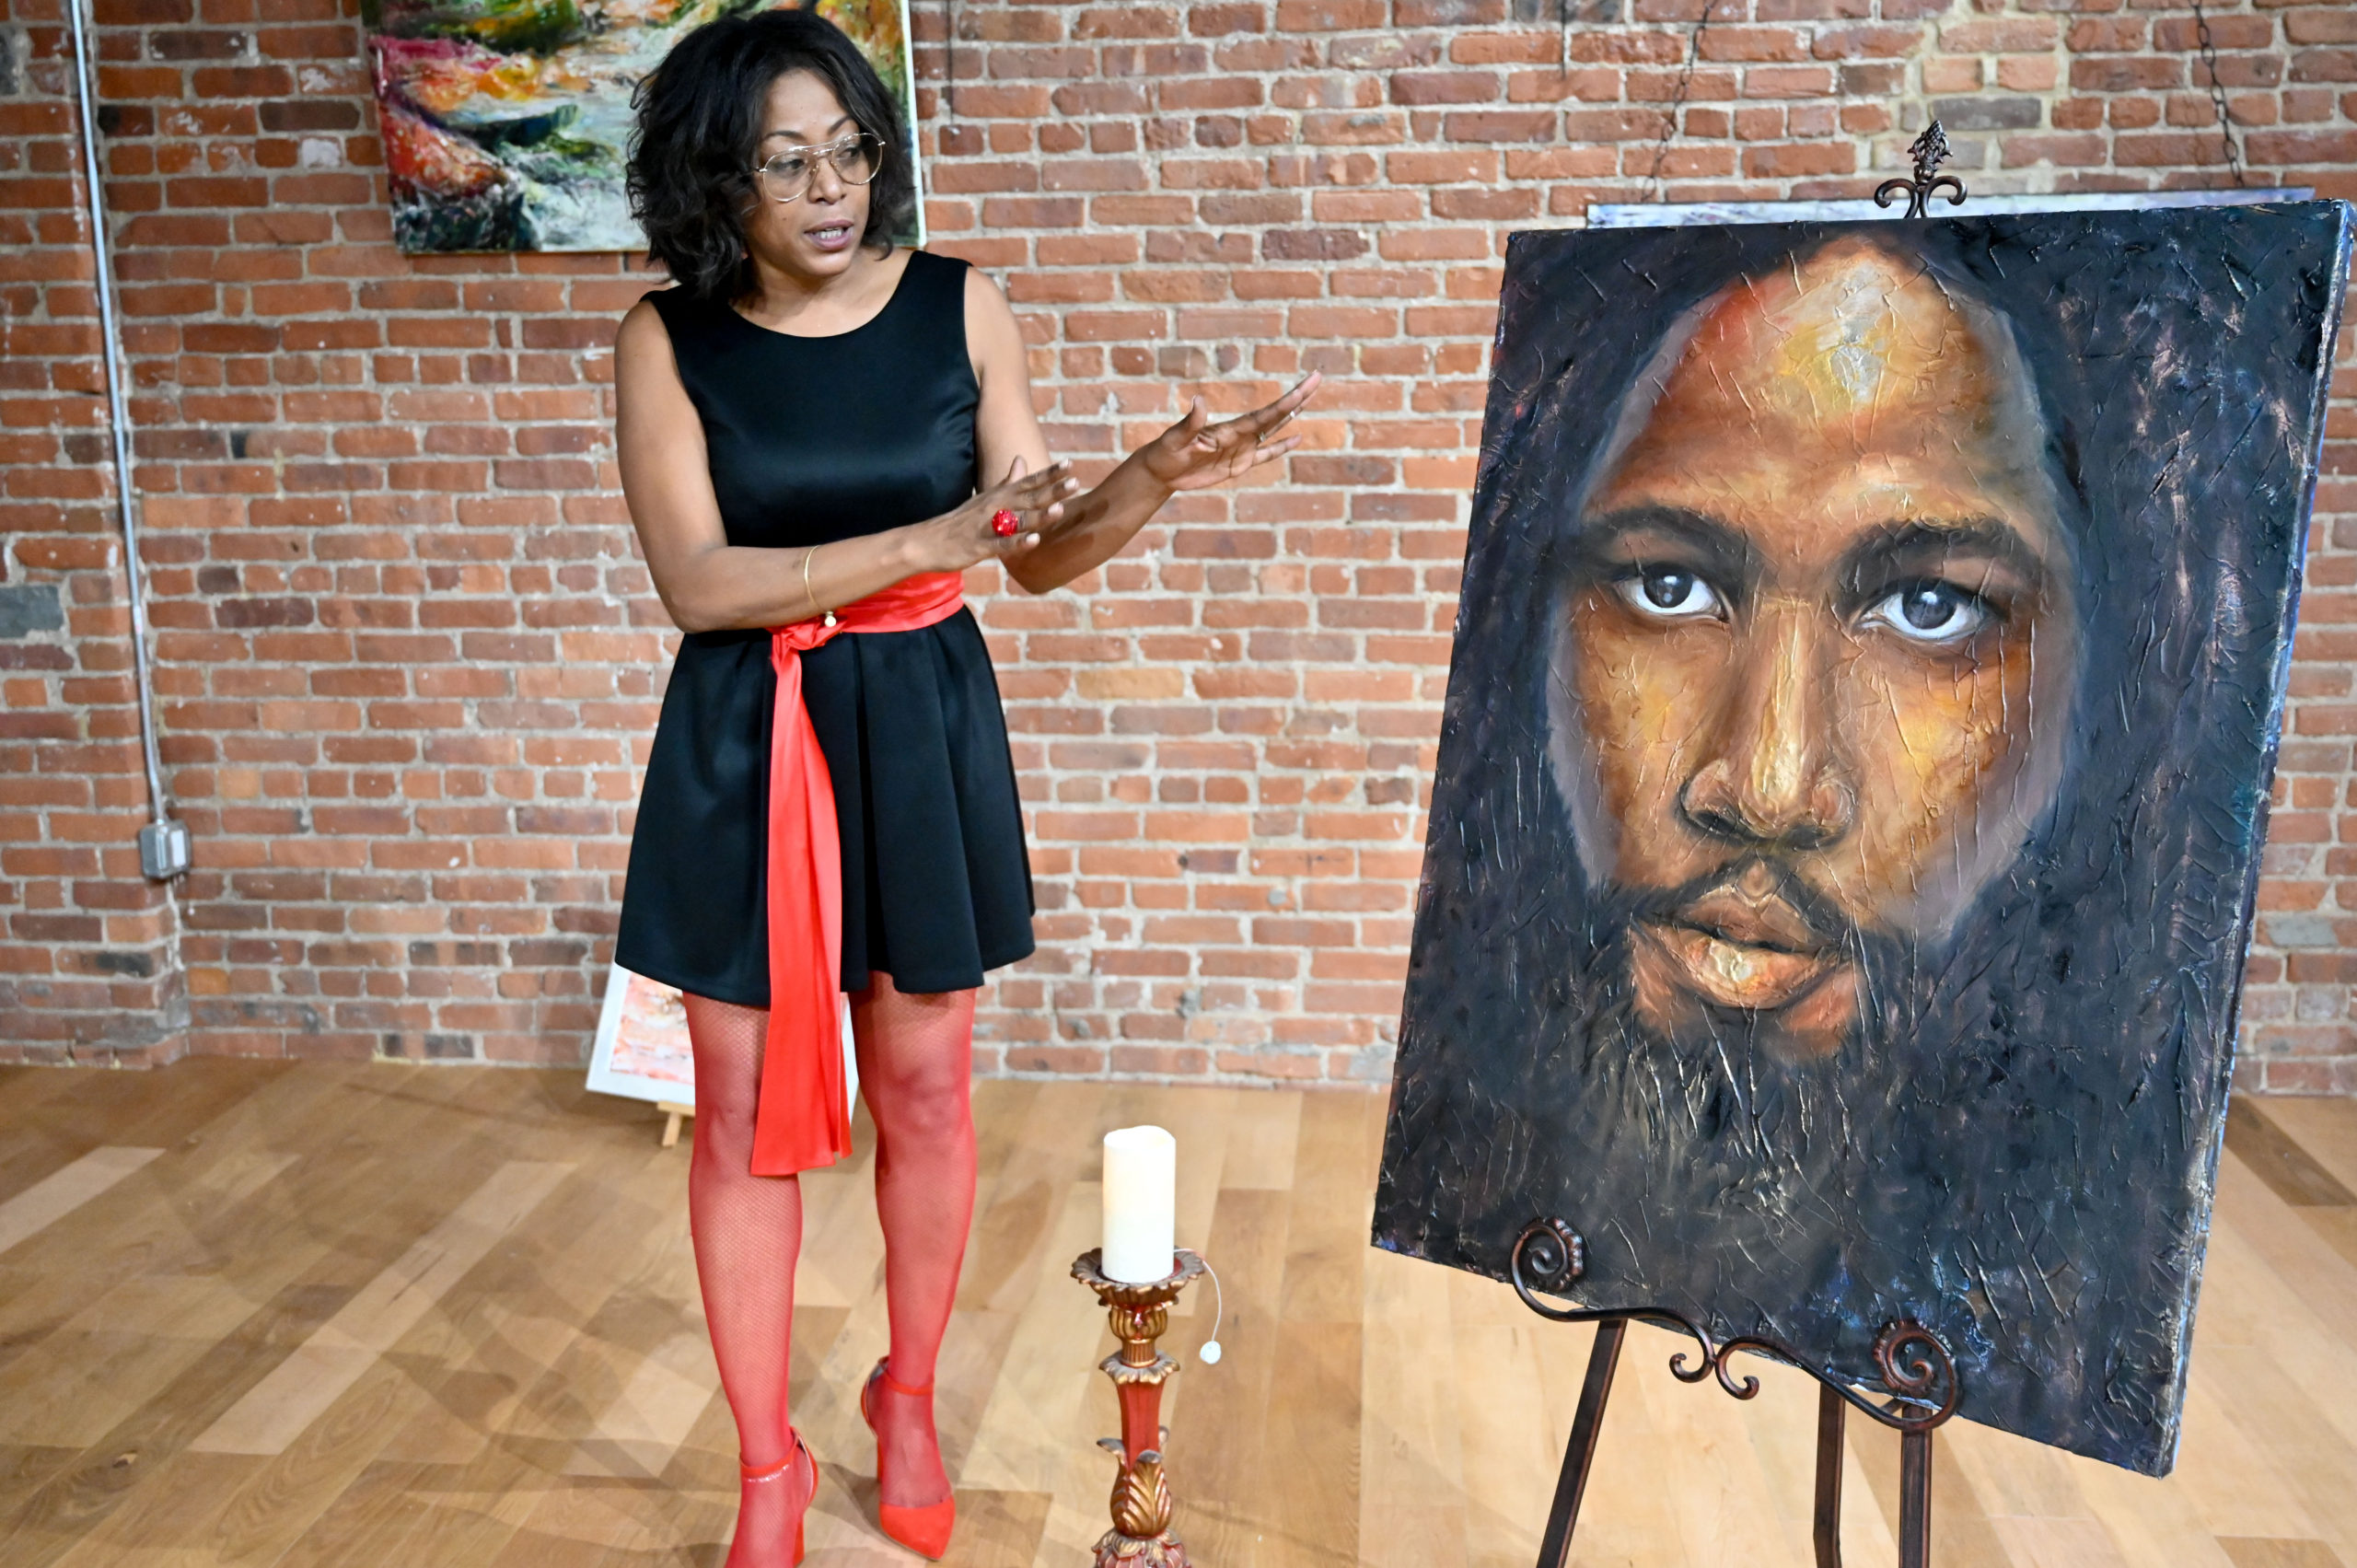 Paintings In The Garden III, an Art Fundraiser Promoting Caribbean Art